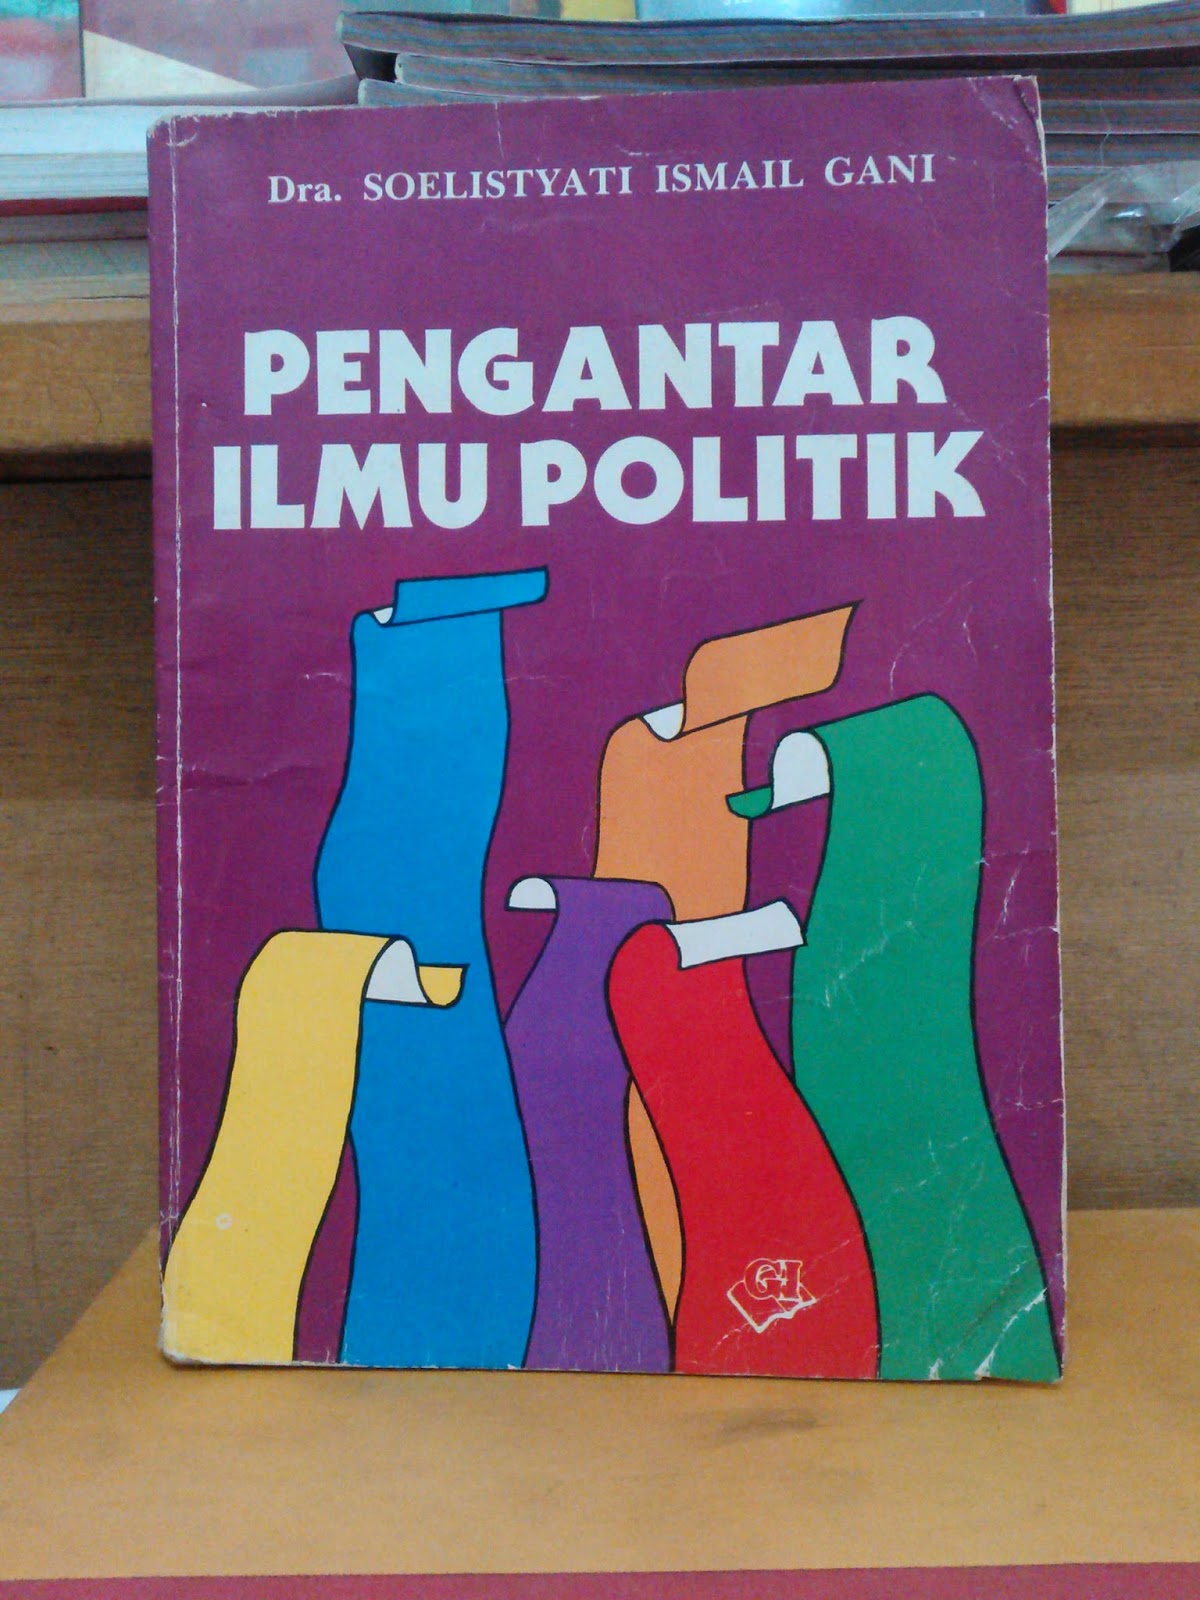 GUDANG BUKU SOSIAL: PENGANTAR ILMU POLITIK by Soelistyati Ismail Gani